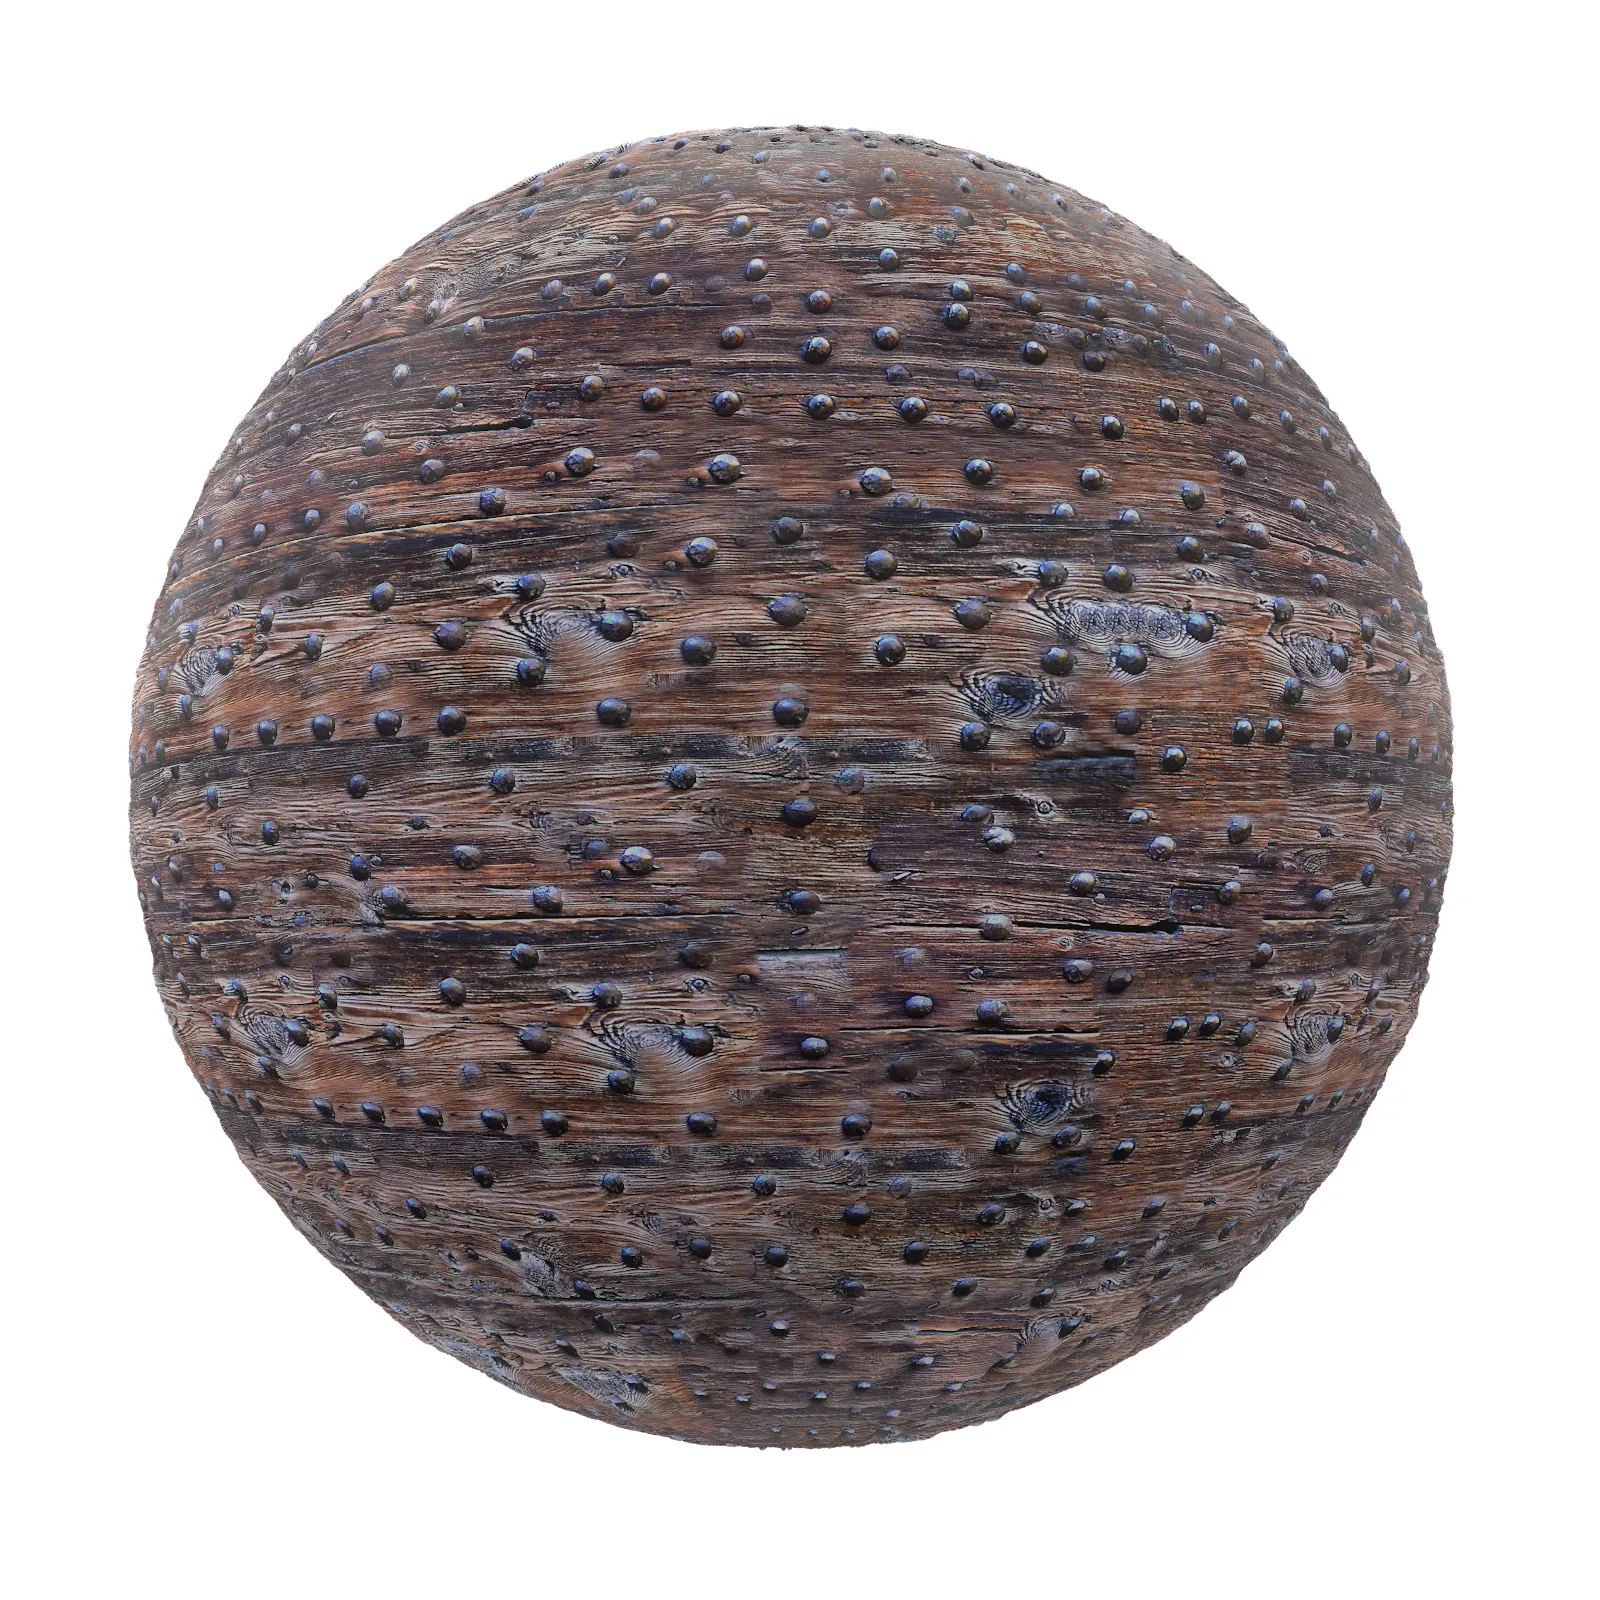 3ds Max Files – Texture – 8 – Wood Texture – 103 – Wood Texture by Minh Nguyen